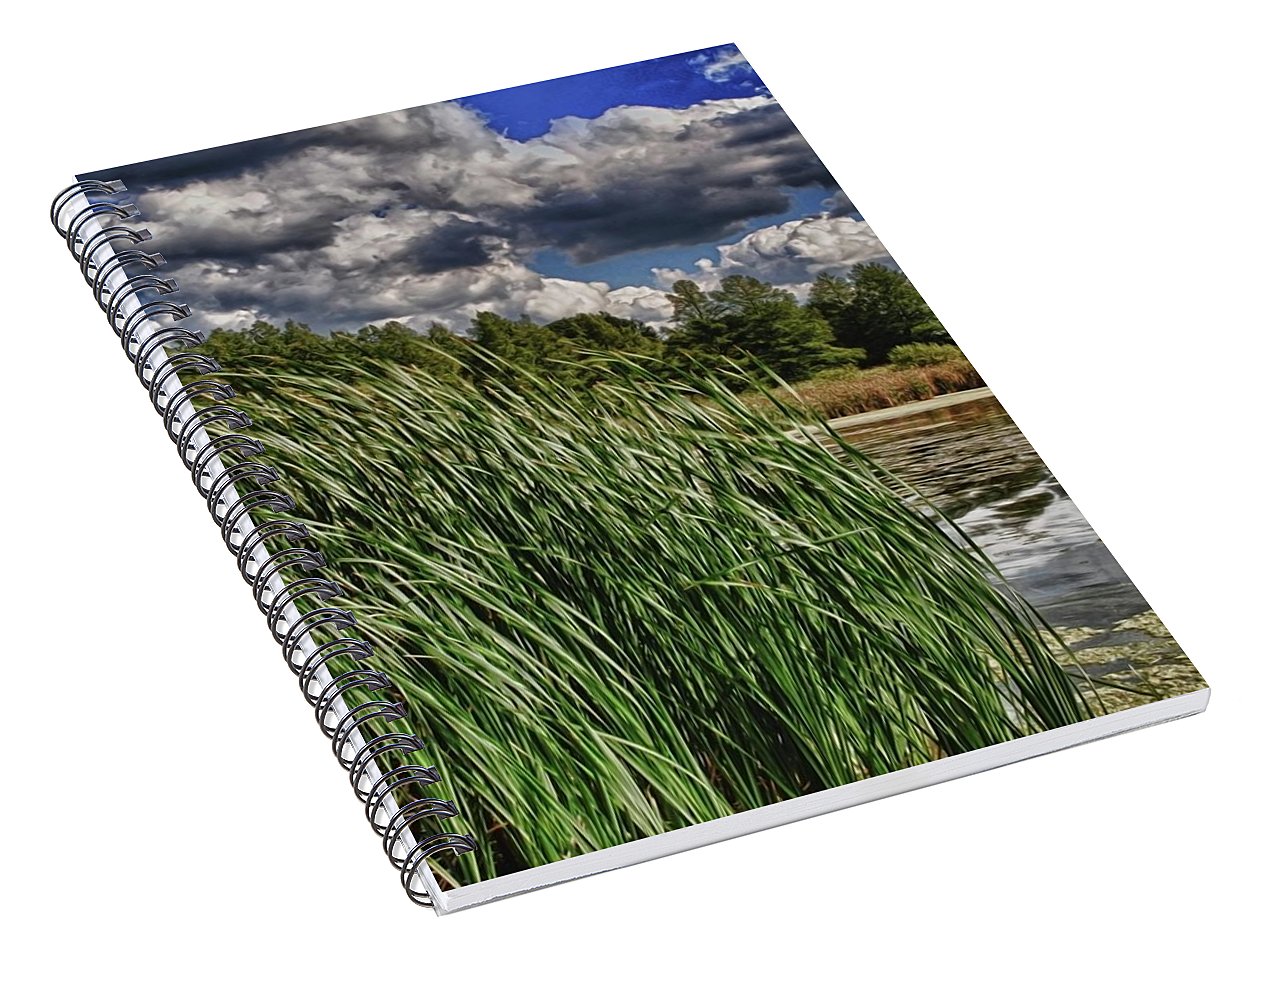 Reeds Along a Campground Lake - Spiral Notebook